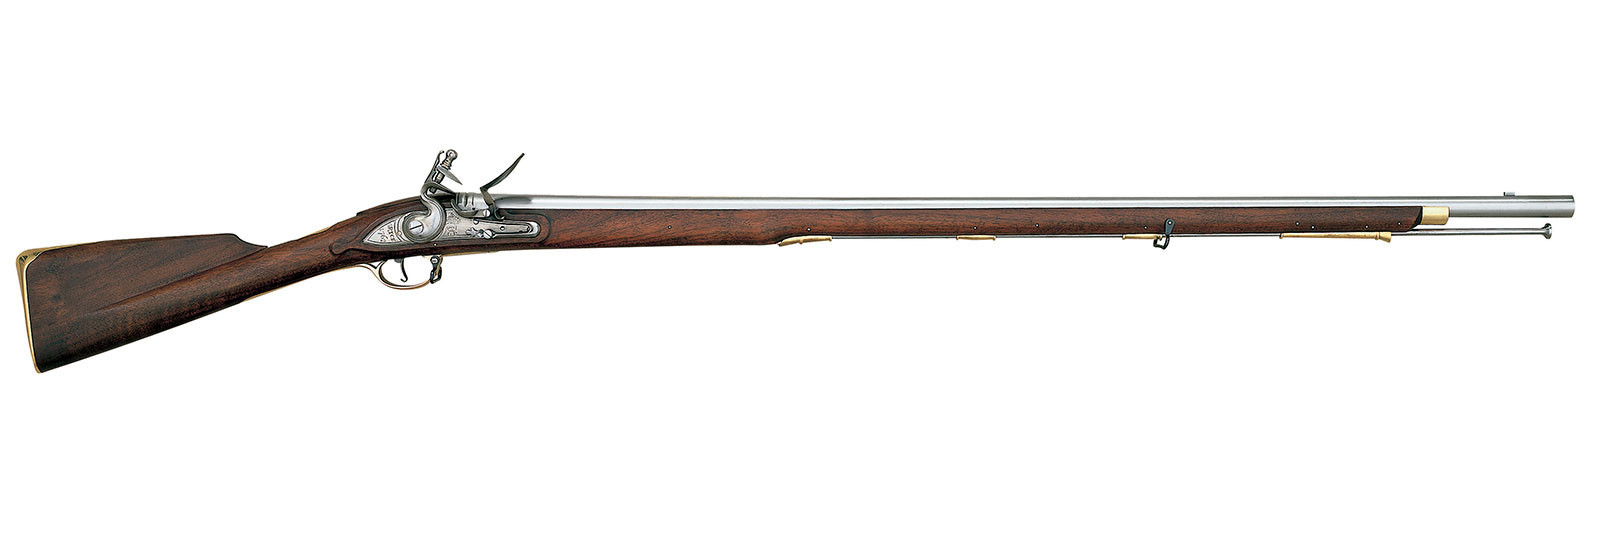 Brown Bess Rifle